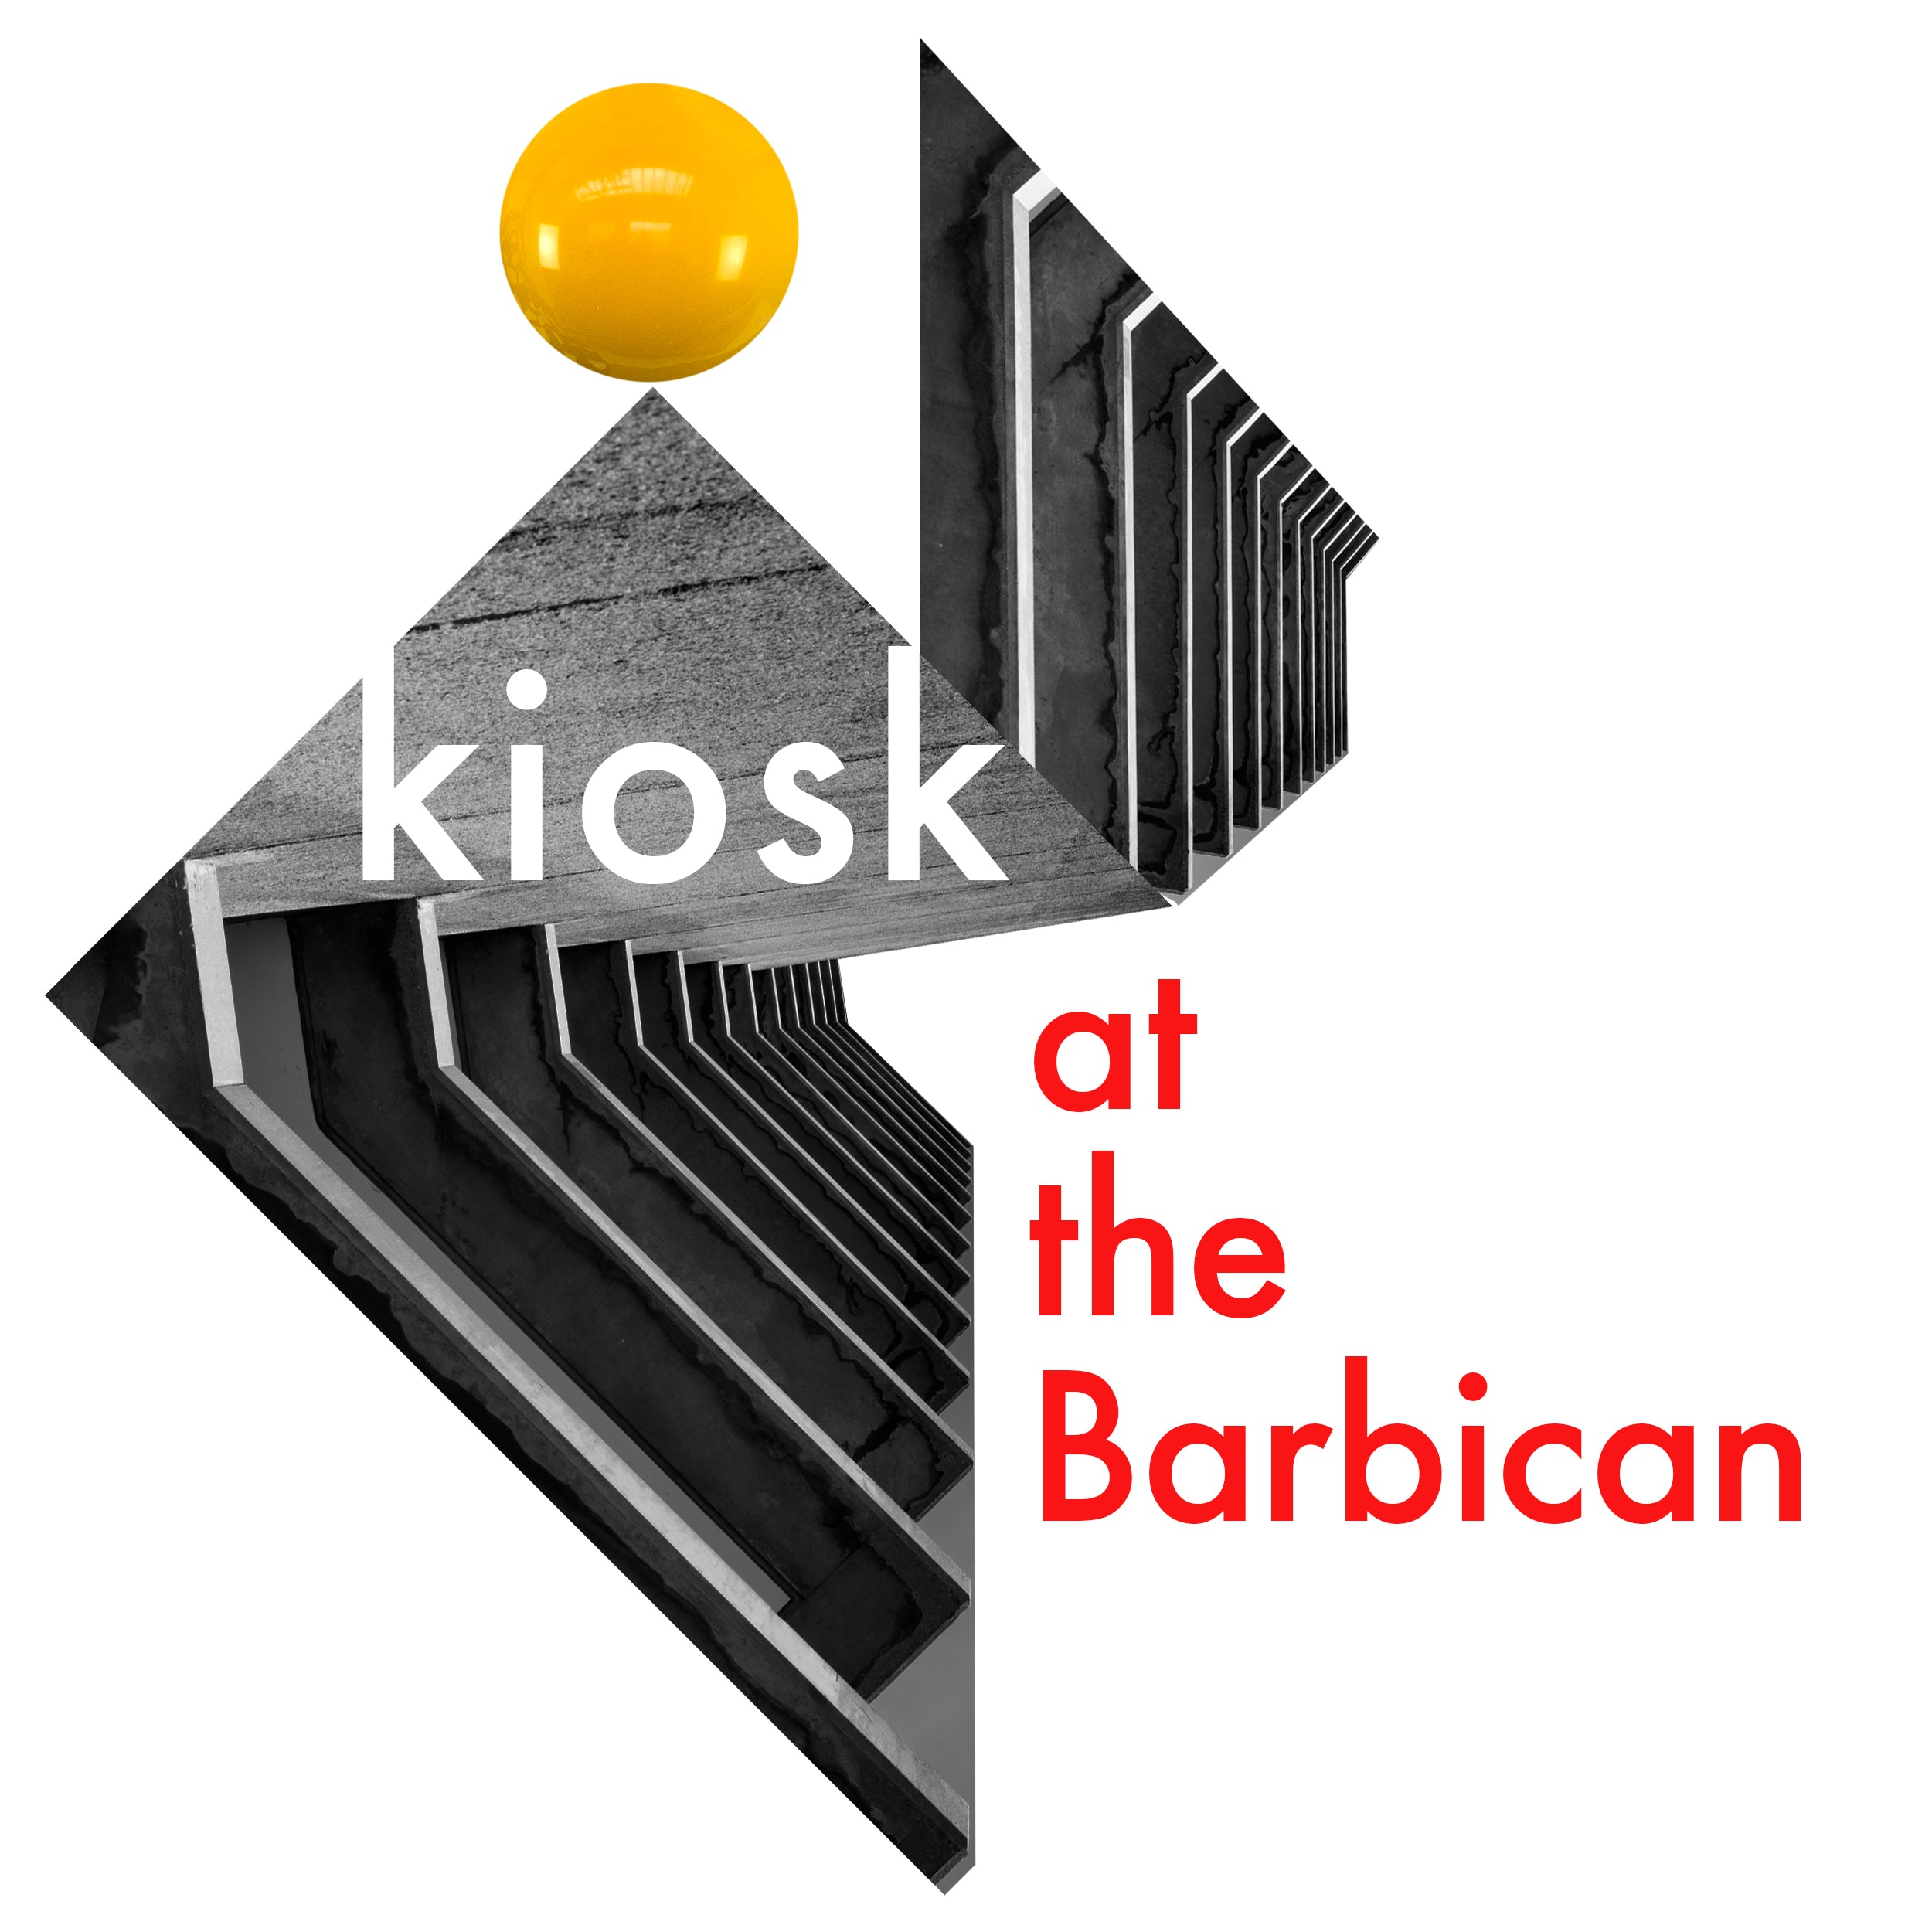 KIOSK visits the Barbican